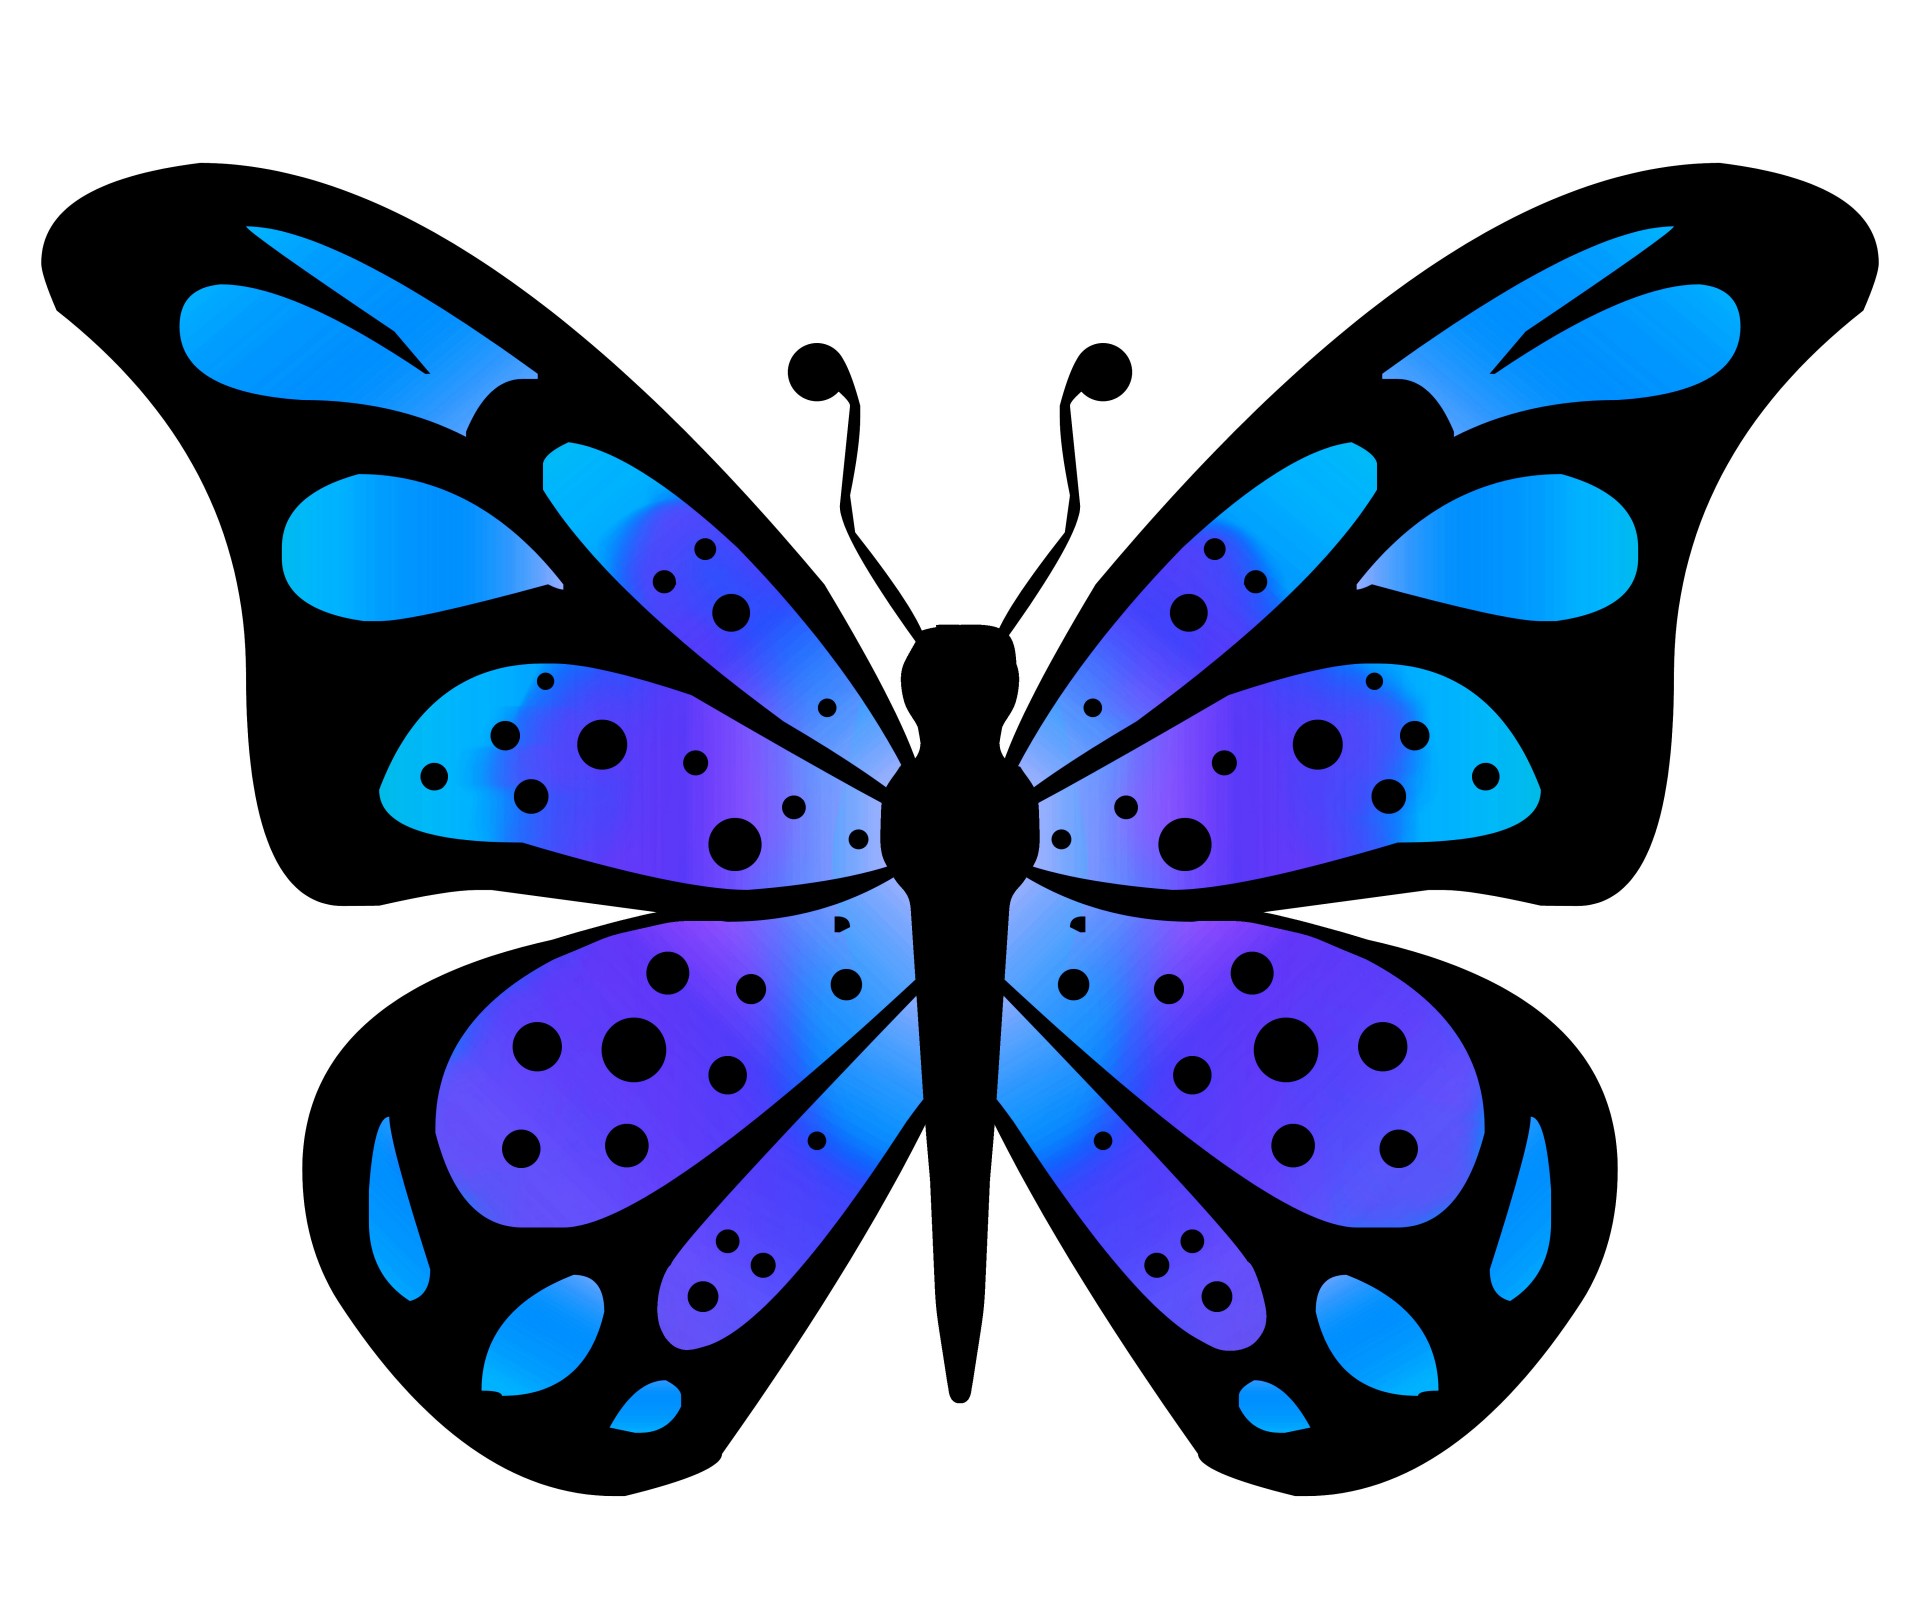 Butterfly clip art at vector 